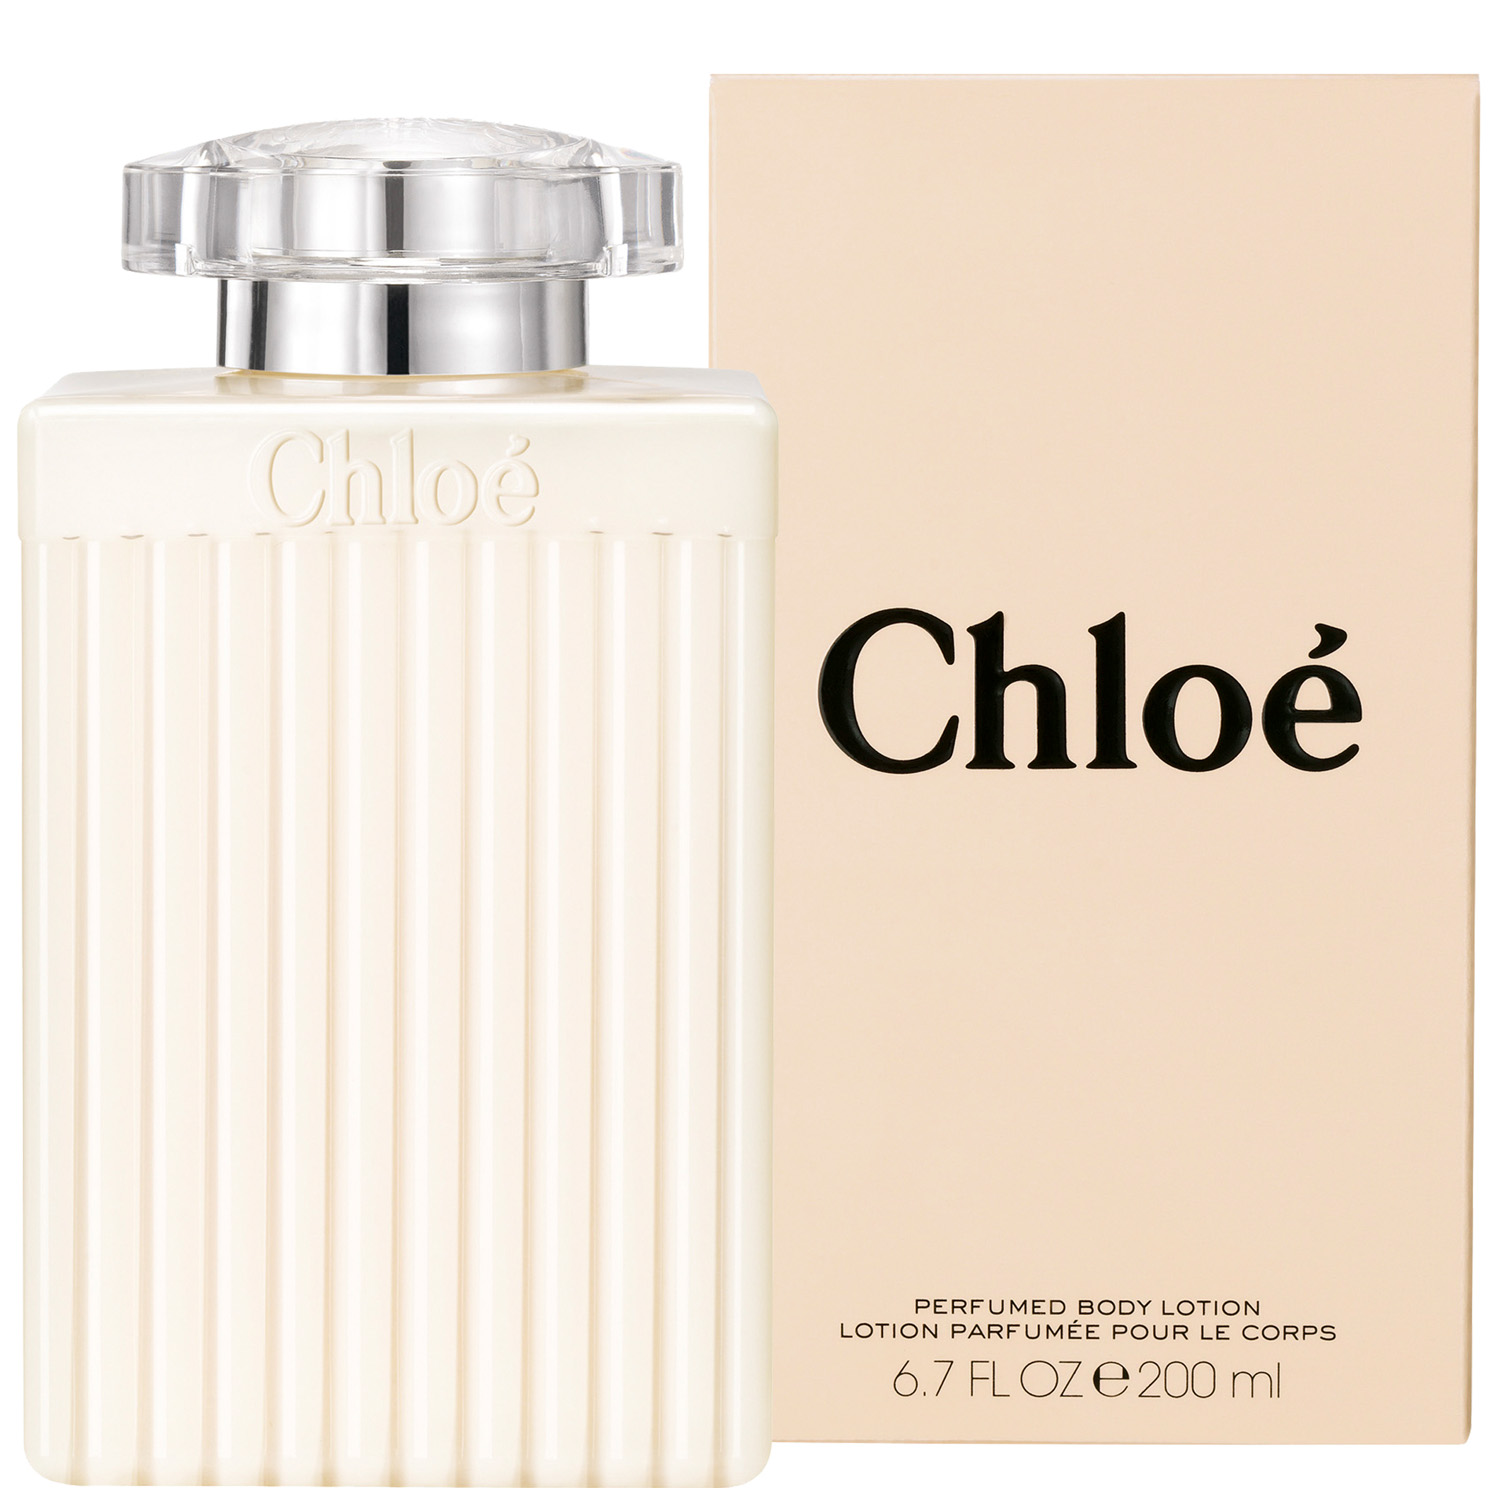 Chloé by Chloé Body Lotion 200ml